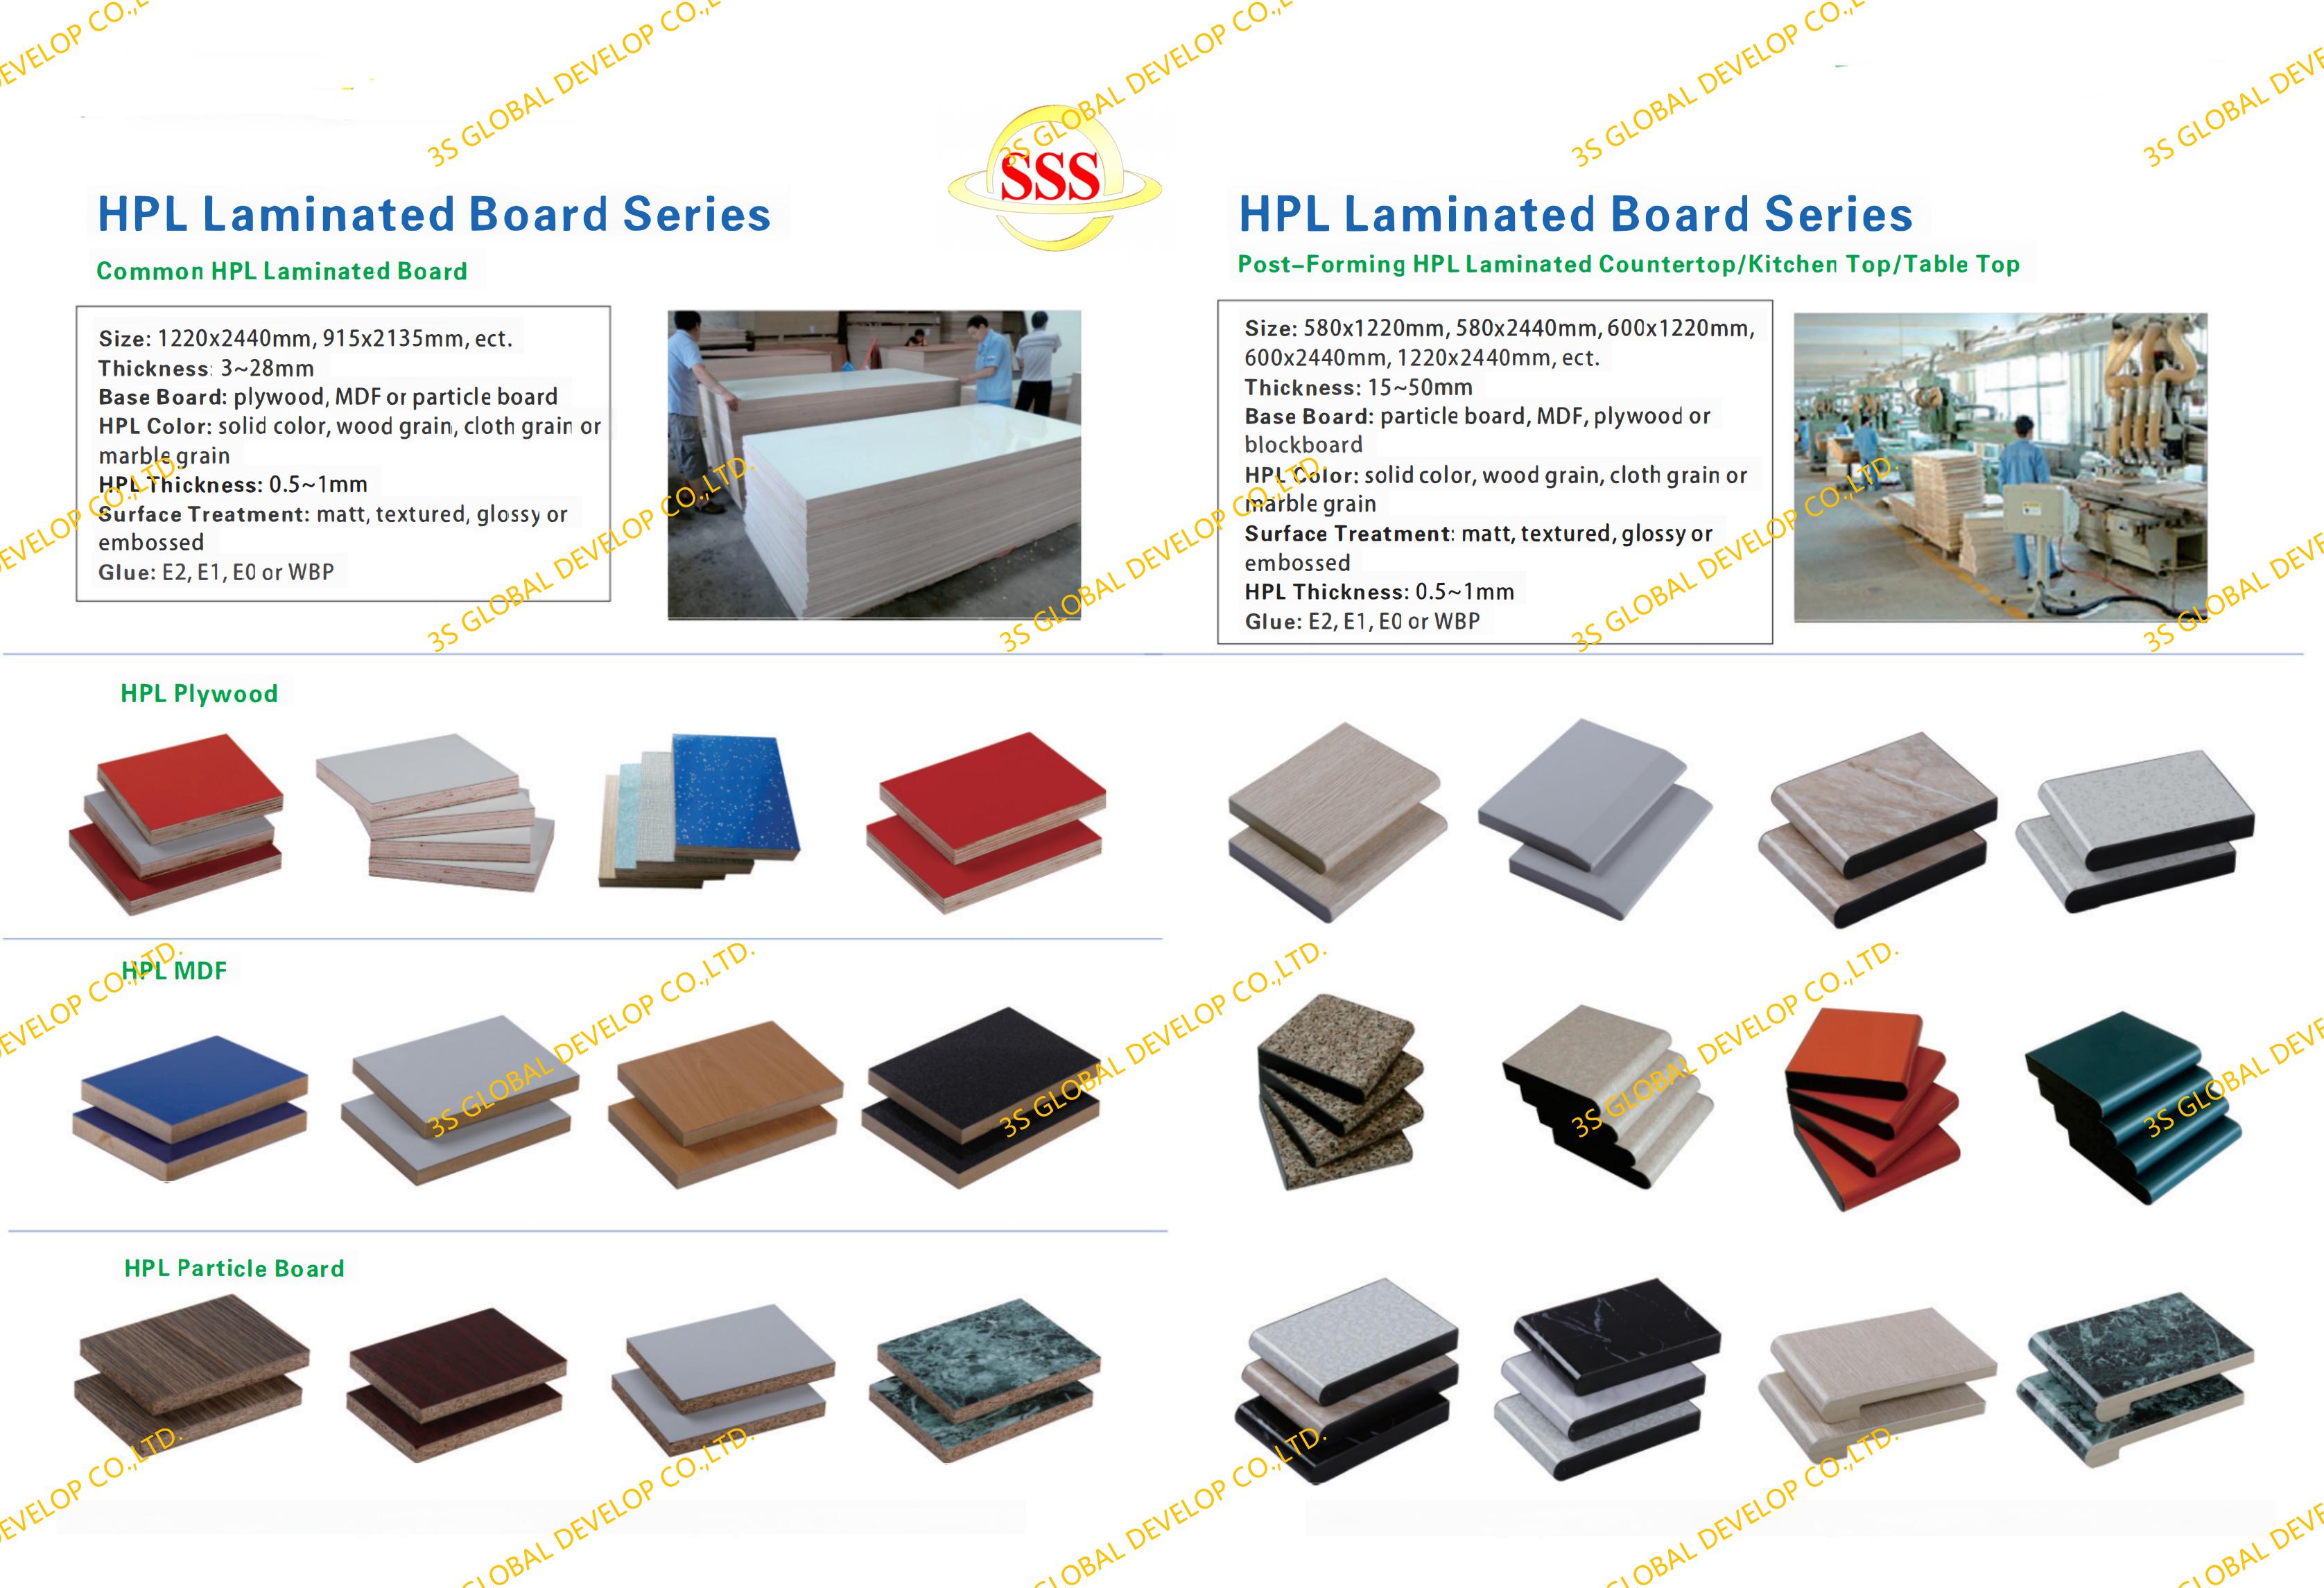 HPL Laminated board,Post-forming HPL laminated countertop/kitchen top/table top.